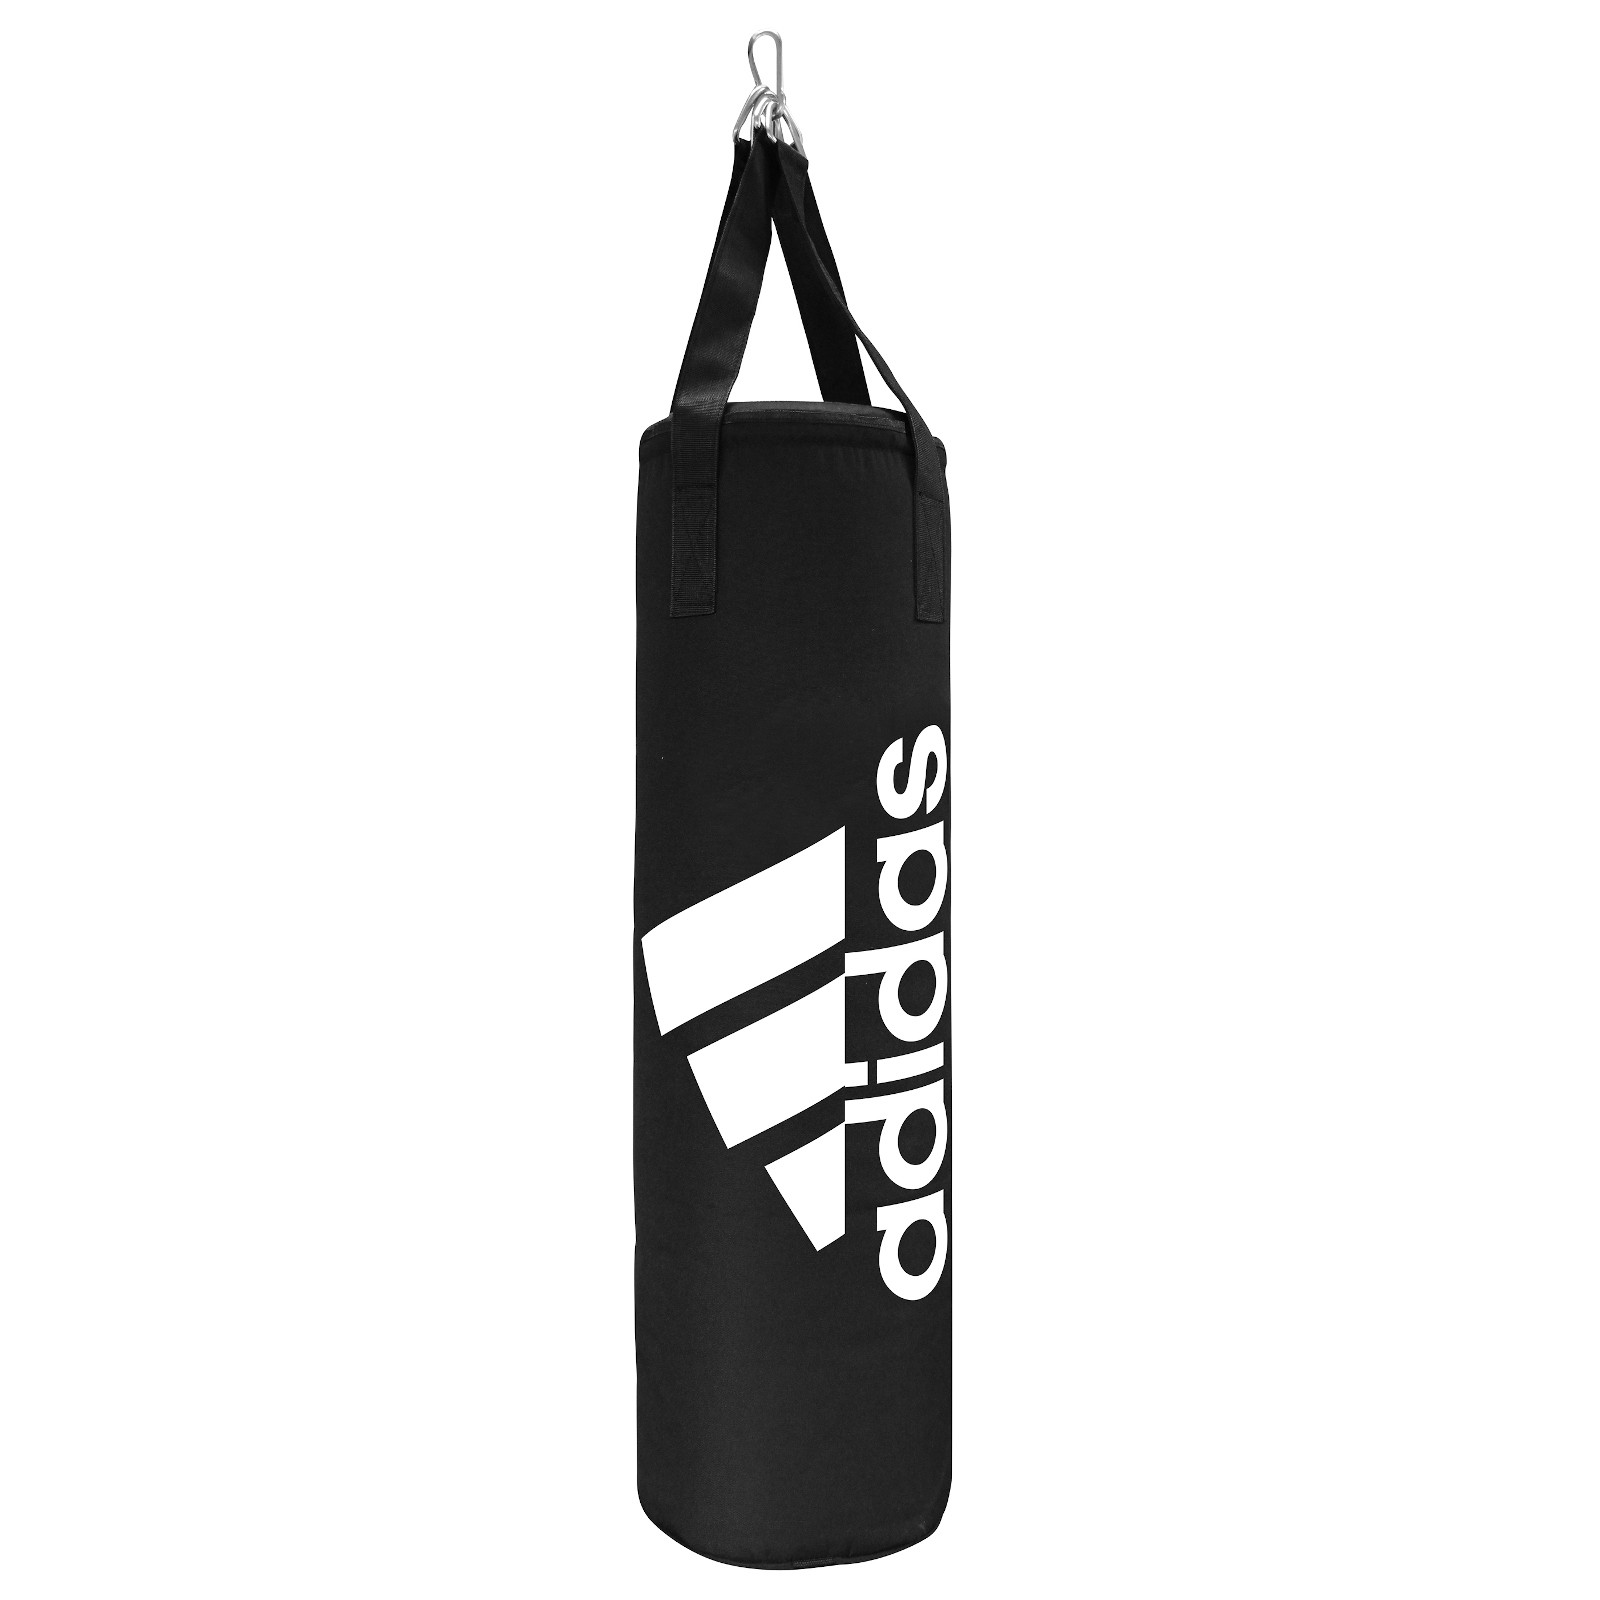 Sac de frappe adidas Lightweight Punching bag 120 cm - Fitshop